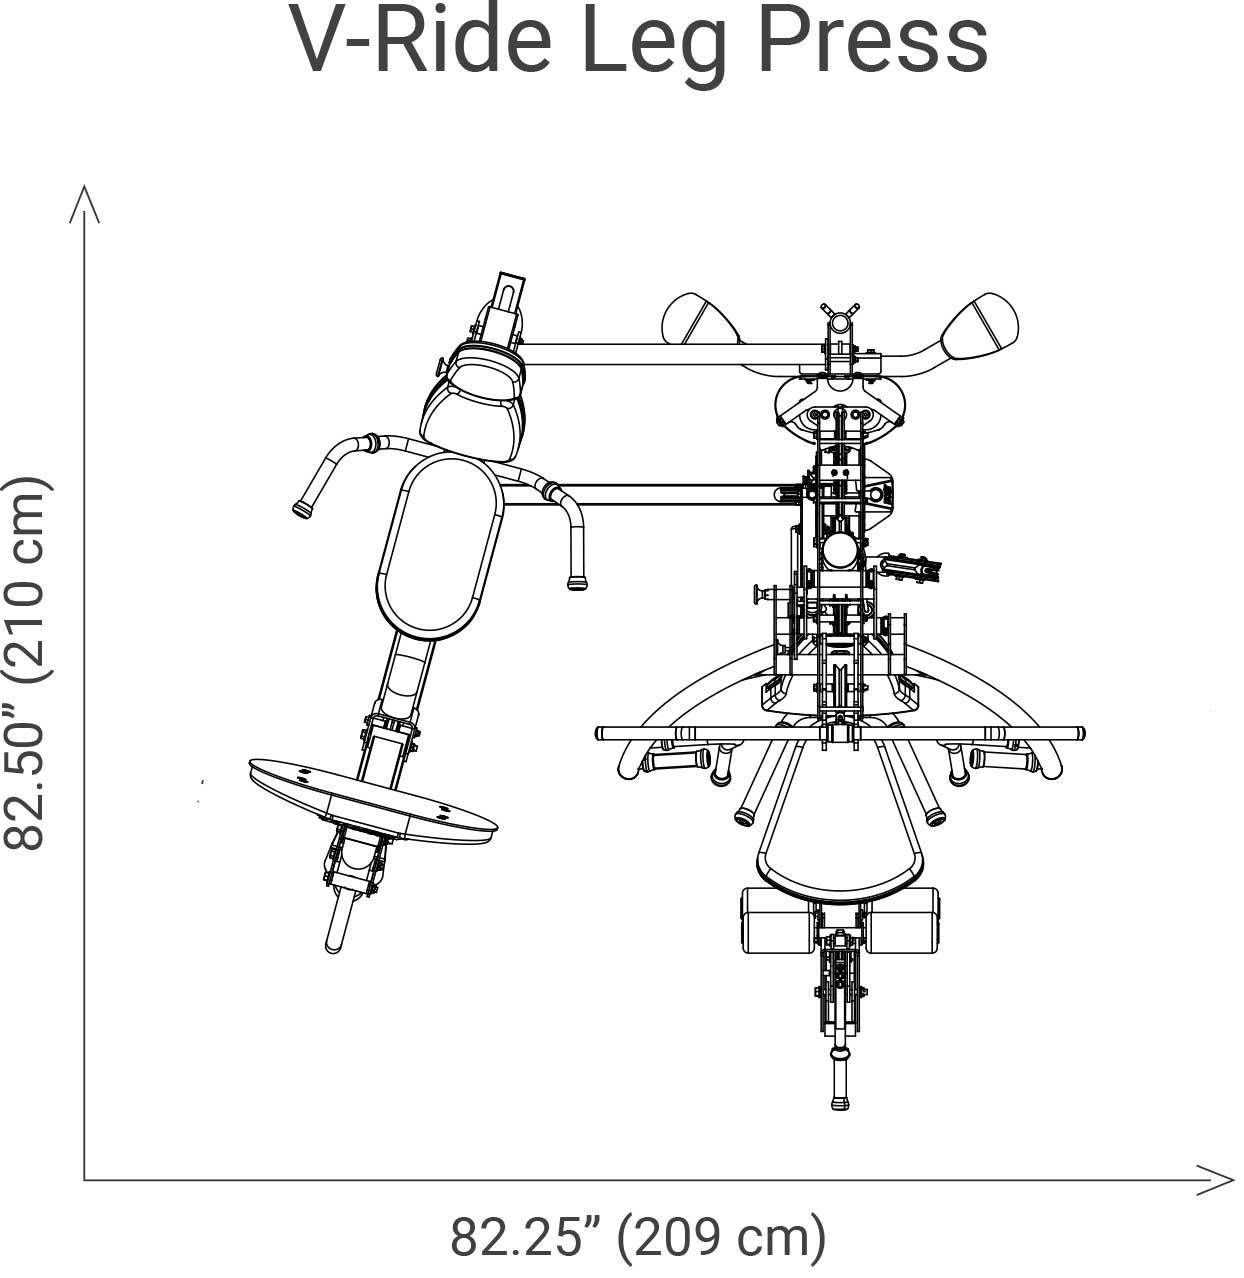 V-Ride Leg Press